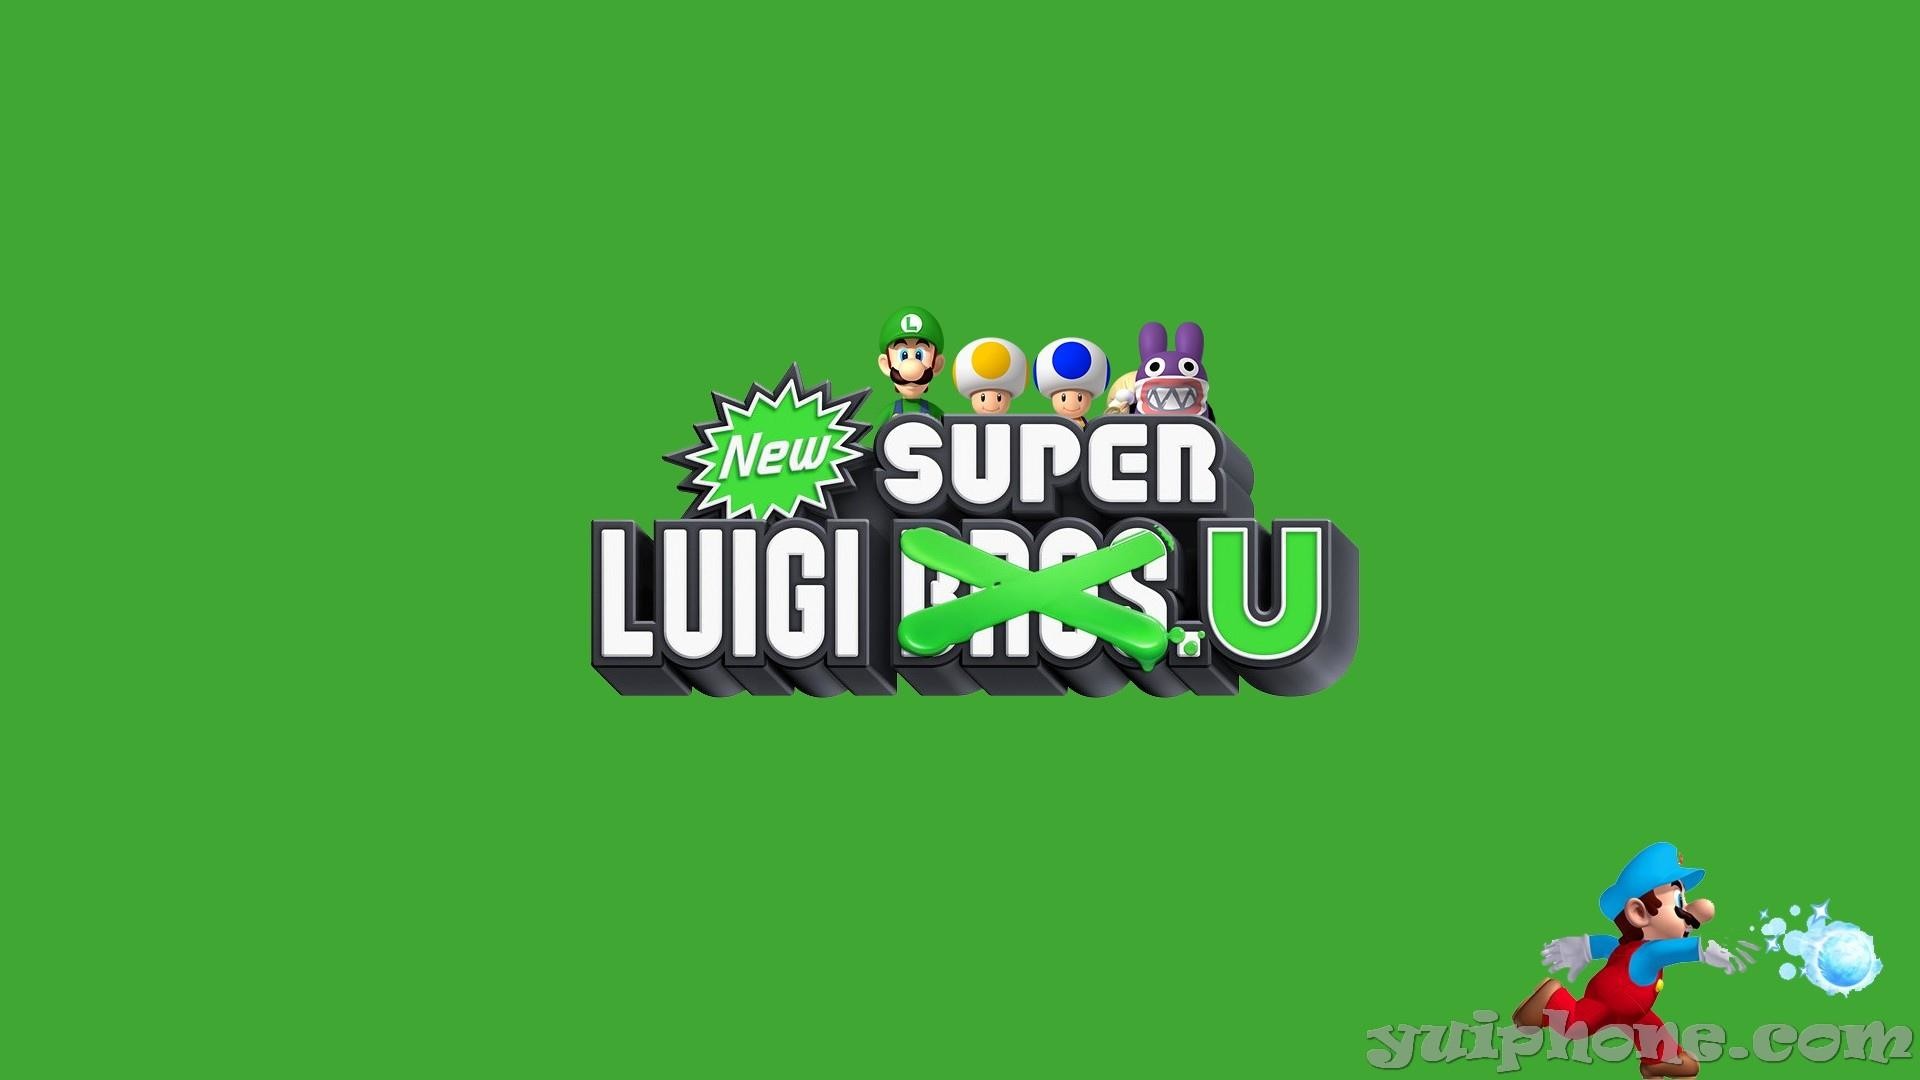 1920x1080 New Super Luigi U wallpapers for iphone